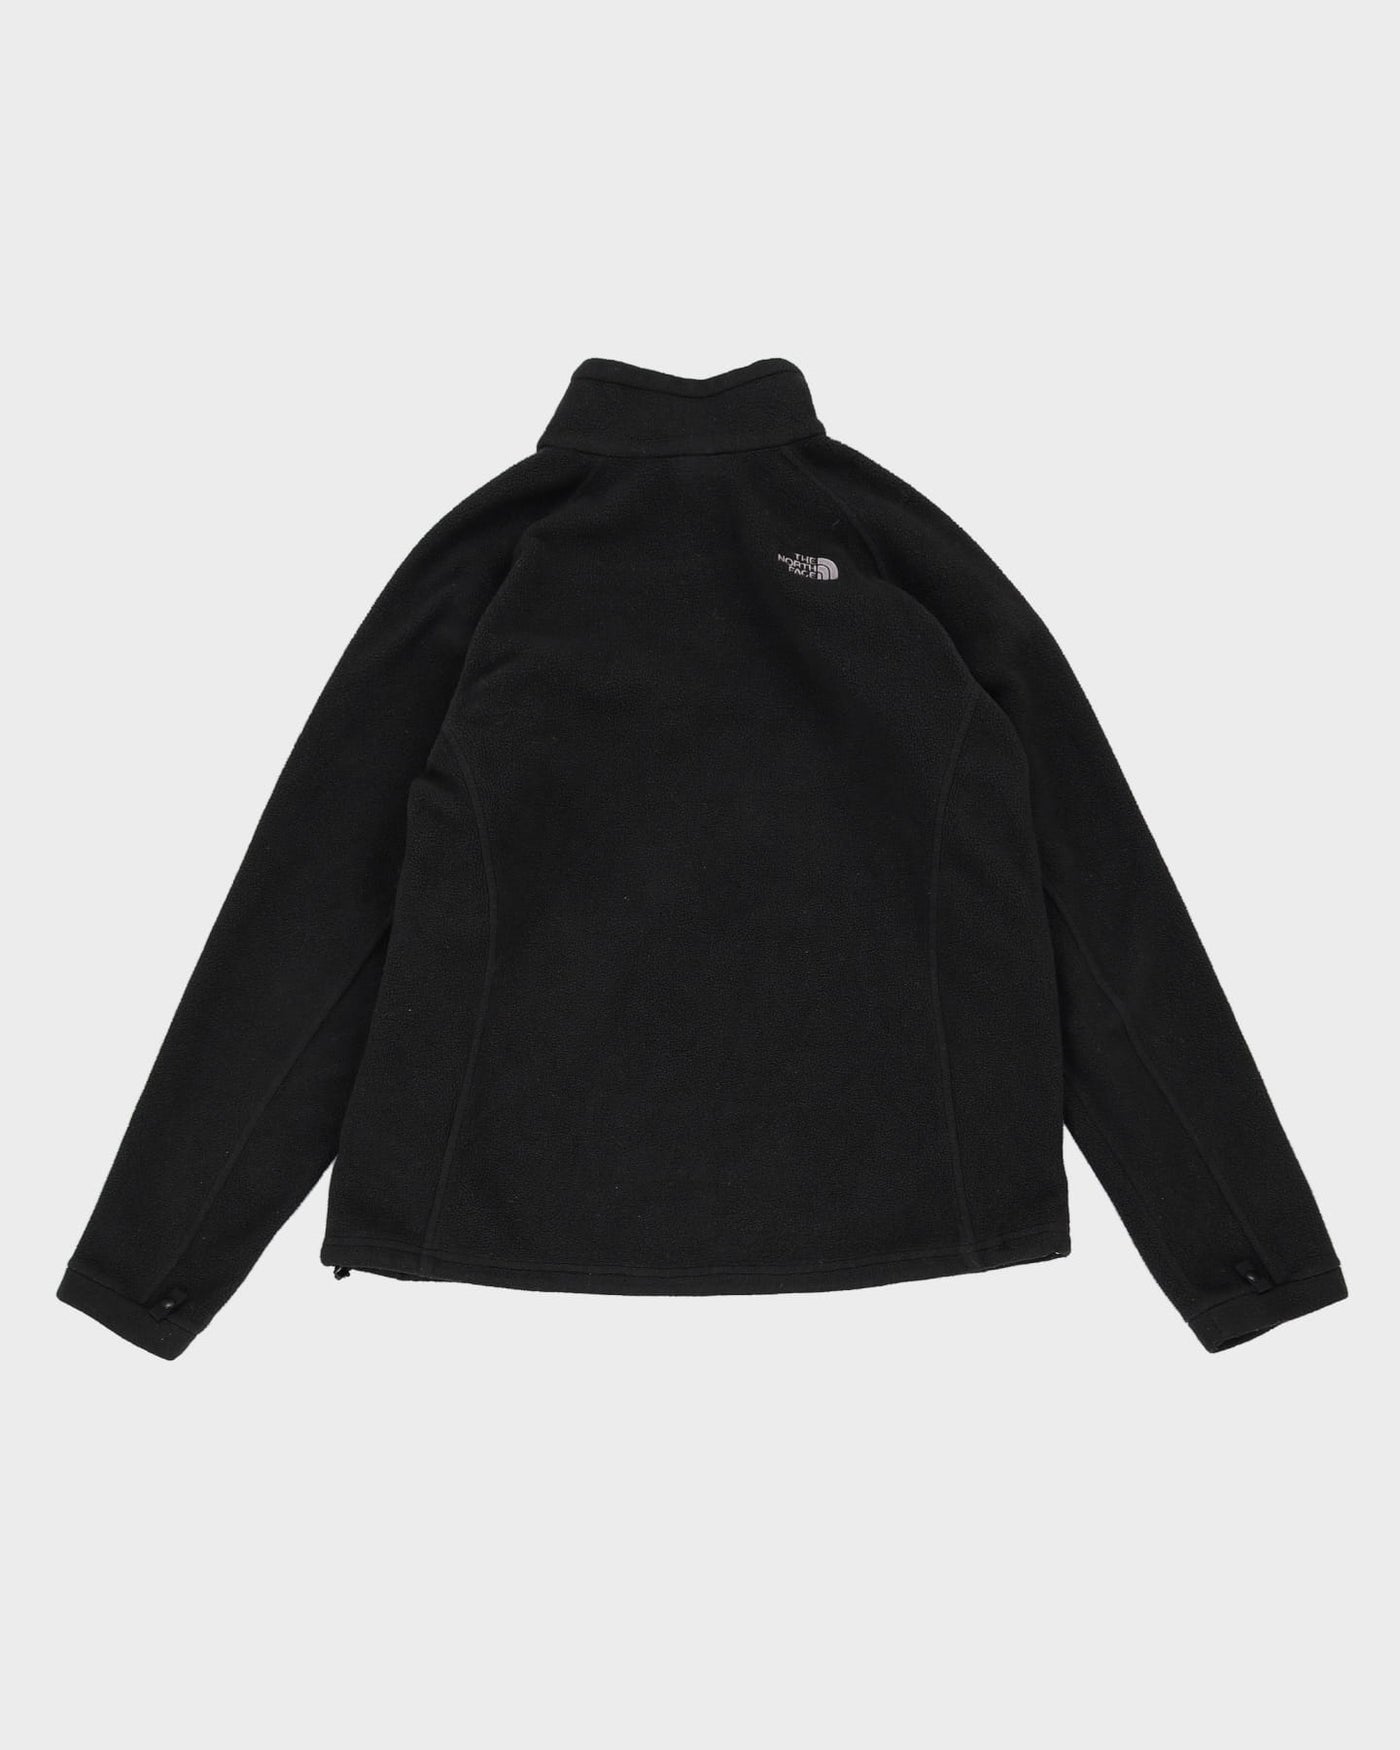 The North Face Black Full-Zip Fleece - XL